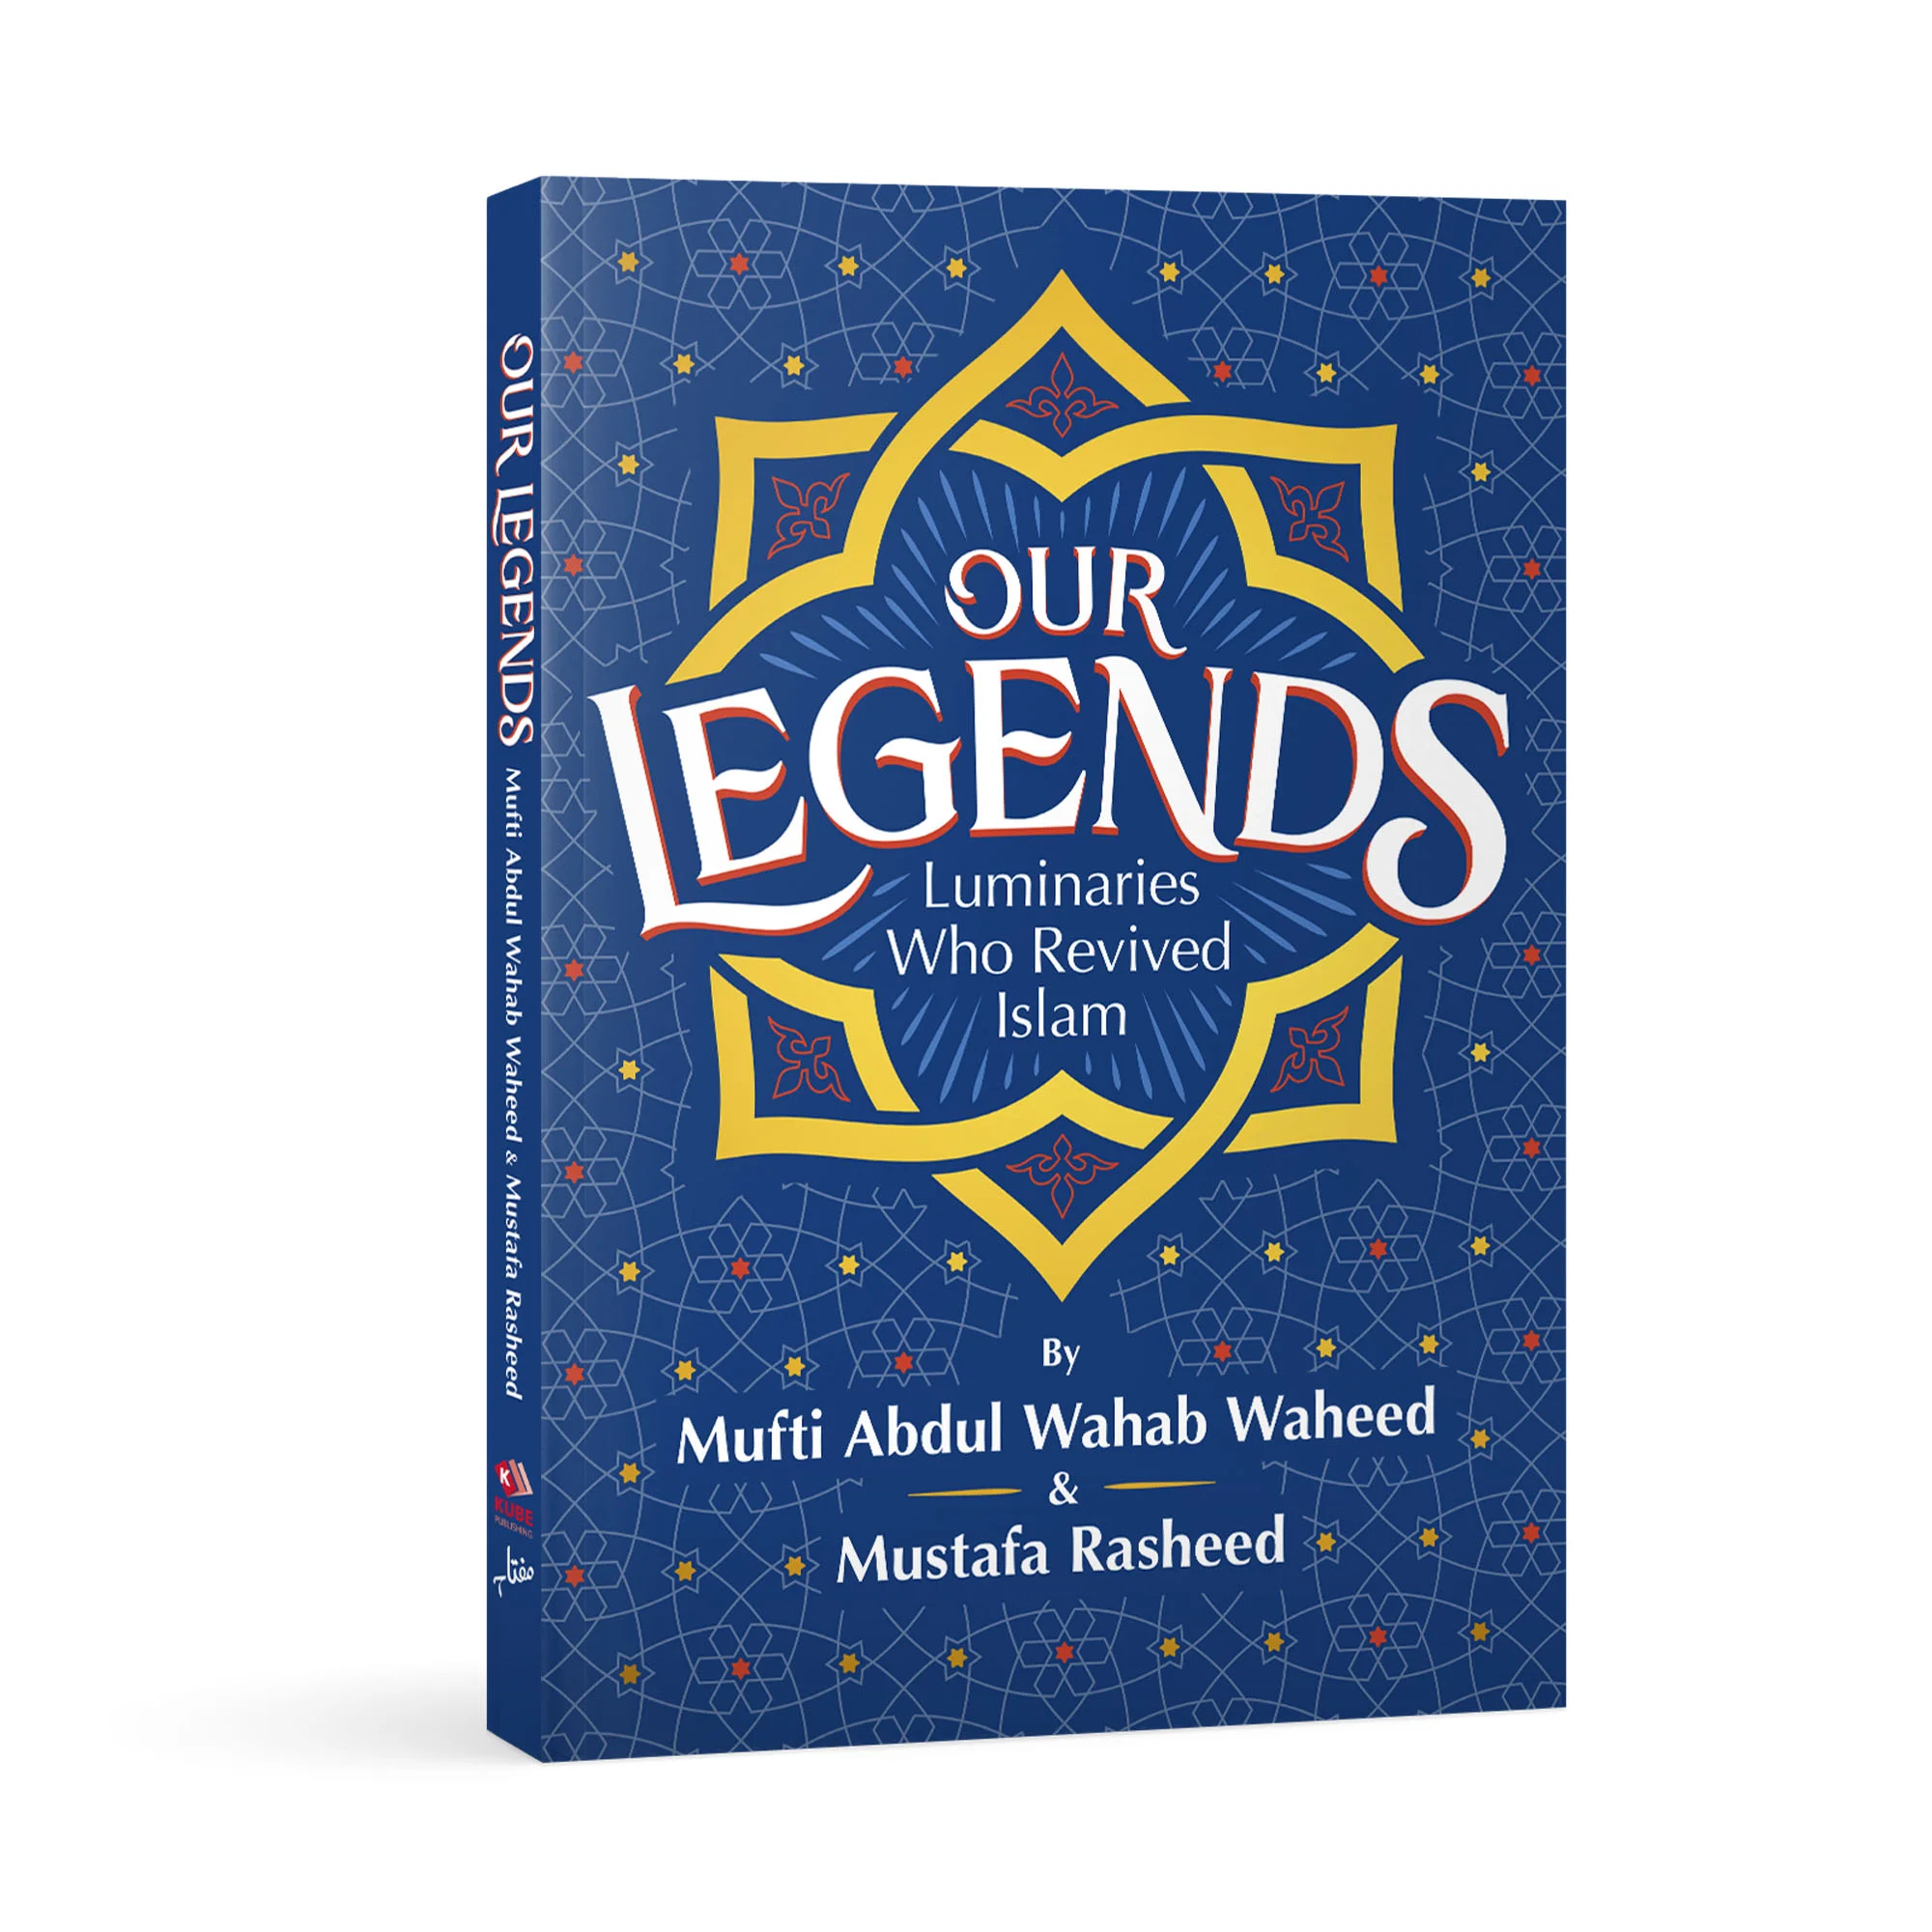 Our Legends by Mufti Abdul Wahab Waheed & Mustafa Rasheed